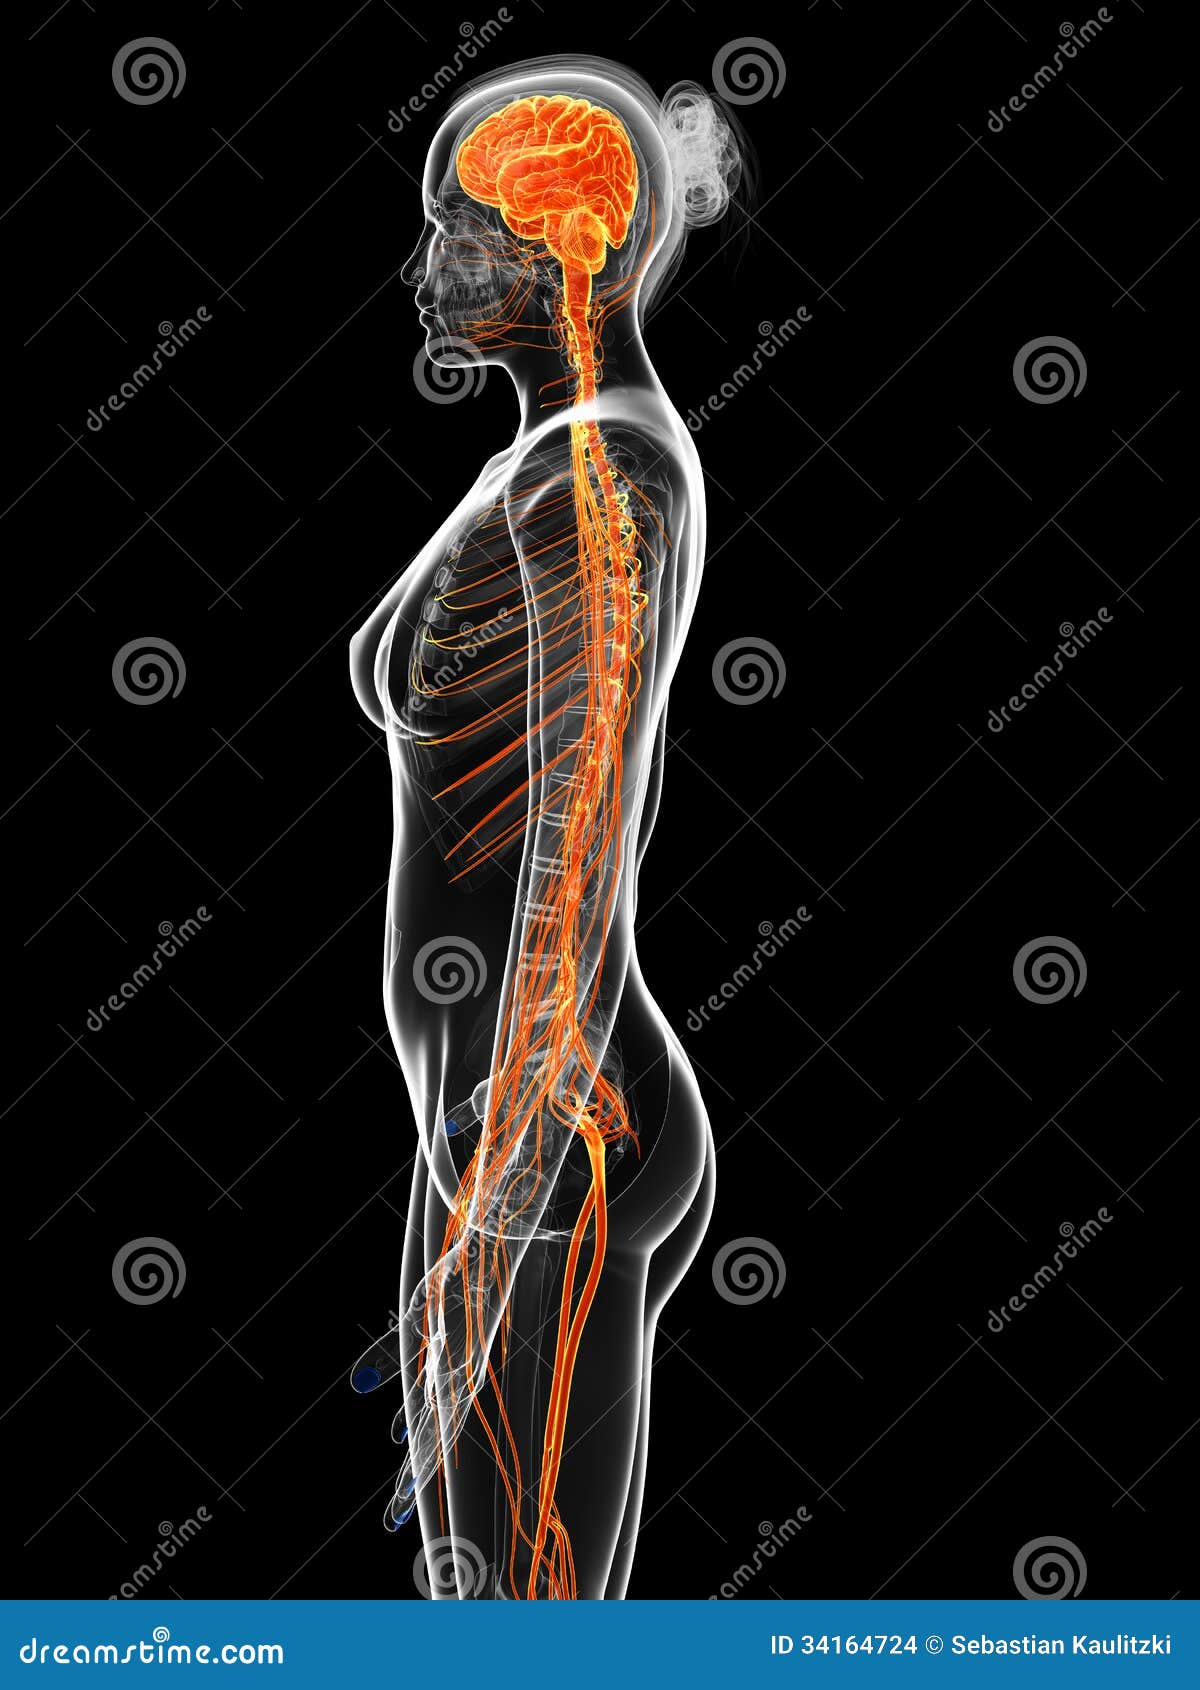 The female nervous system stock illustration. Illustration of painful -  34164724